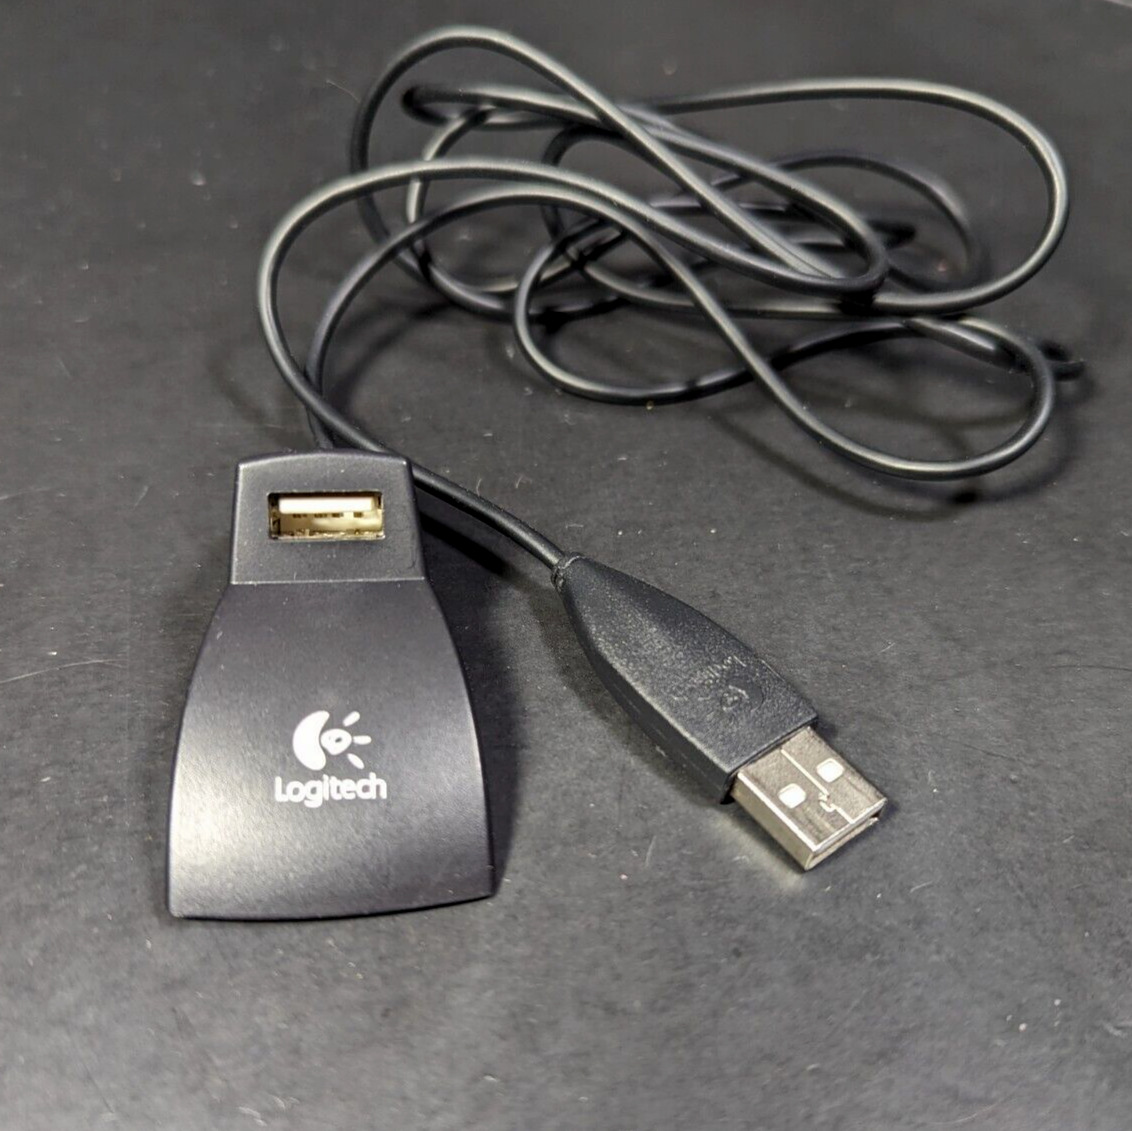 Logitech External USB Stand Mouse/Keyboard/Webcam/Headset/Flashdrive 501688-A000